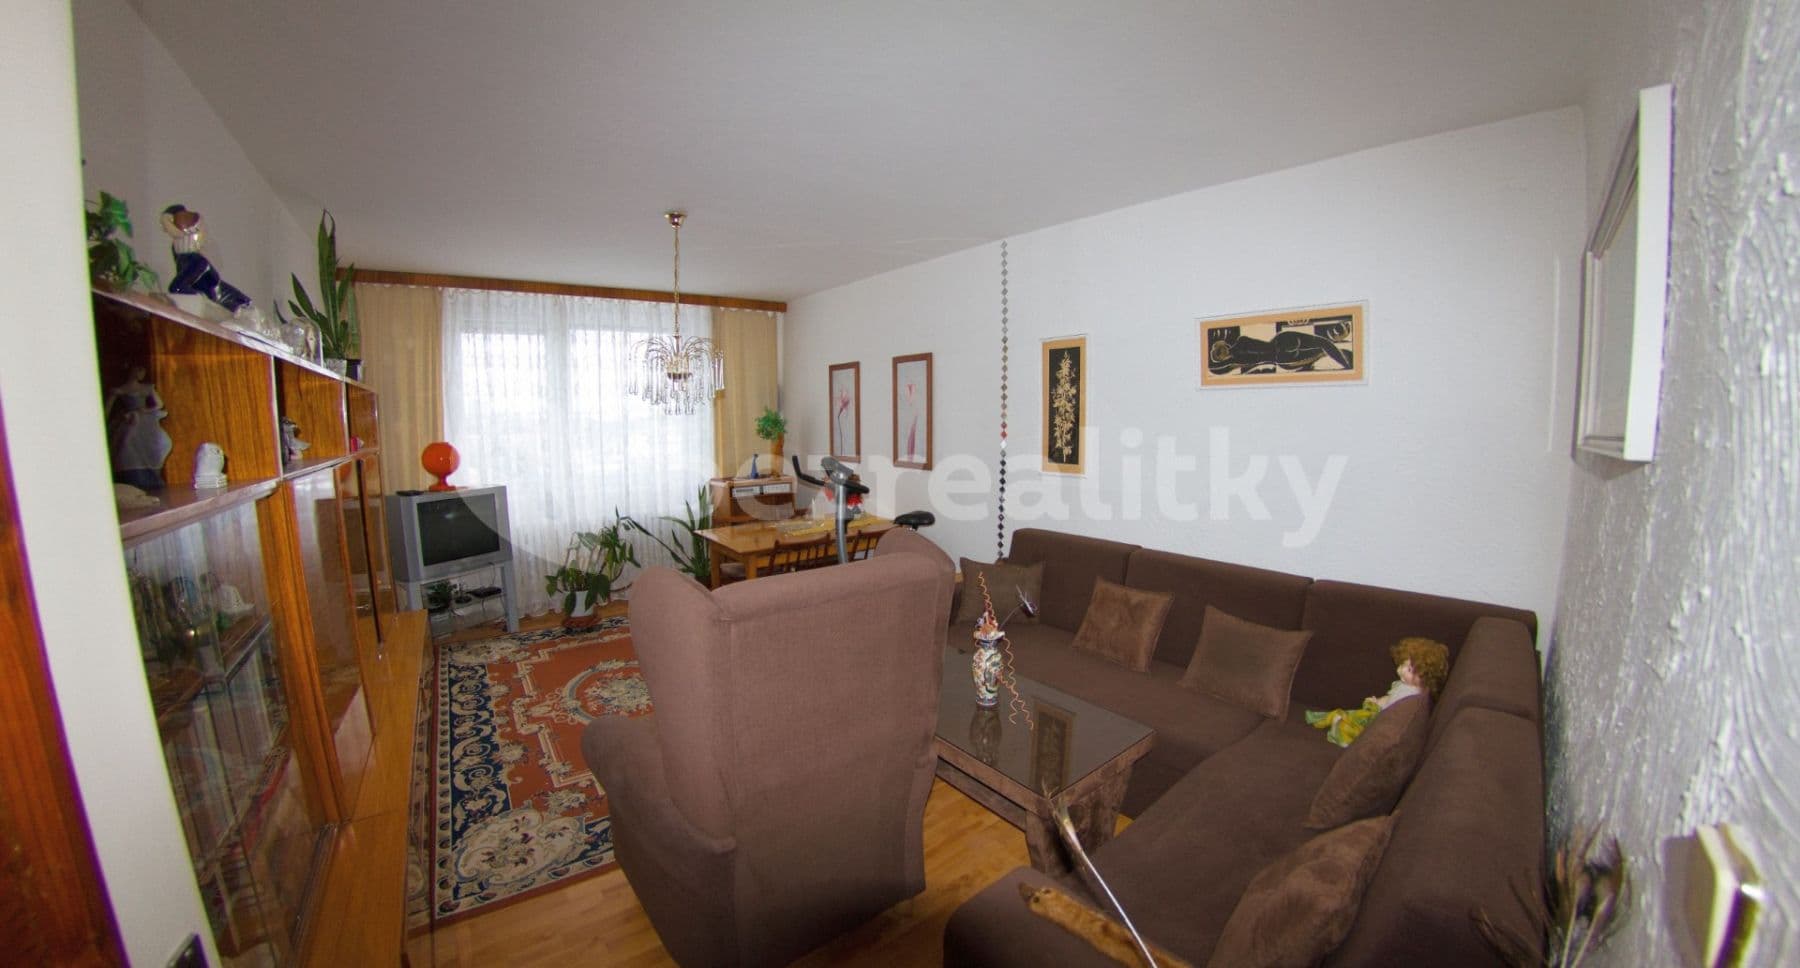 3 bedroom flat for sale, 95 m², Luční, Brno, Jihomoravský Region